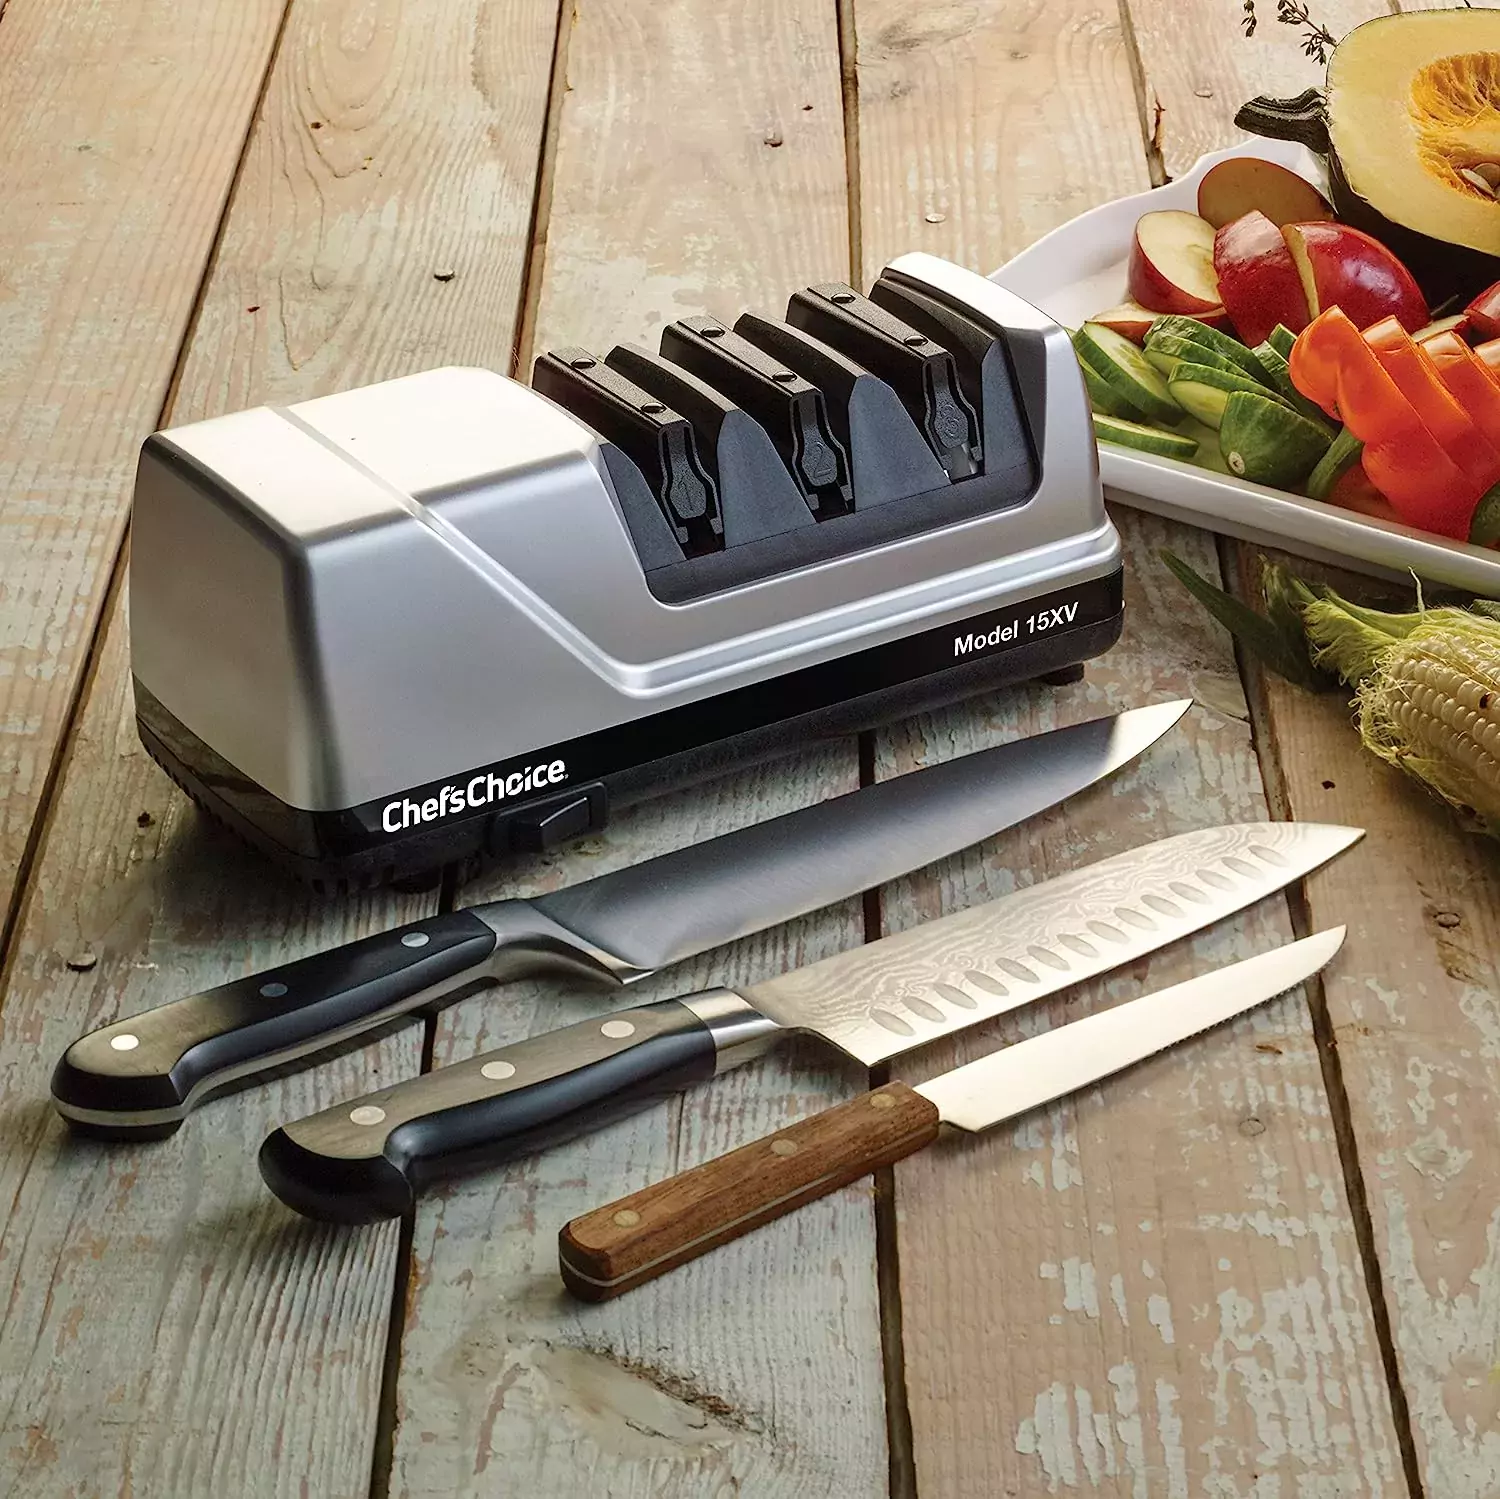 1. Chef’sChoice 15 Trizor XV EdgeSelect Professional Electric Knife Sharpener:

